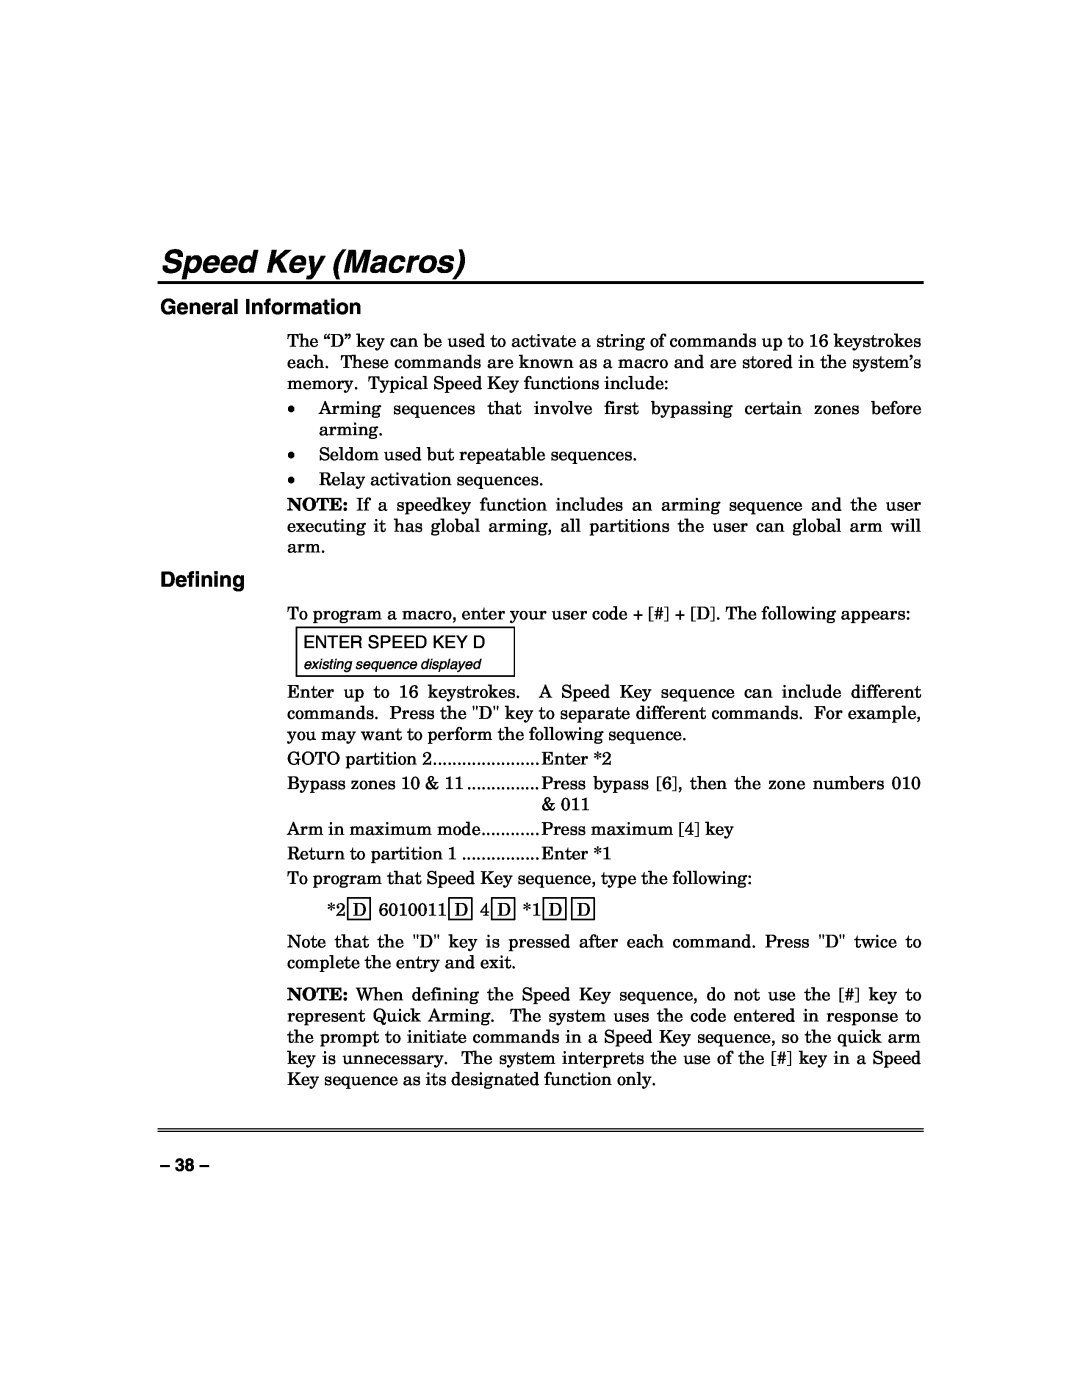 Honeywell VISTA-50PUL manual Speed Key Macros, Defining, General Information 